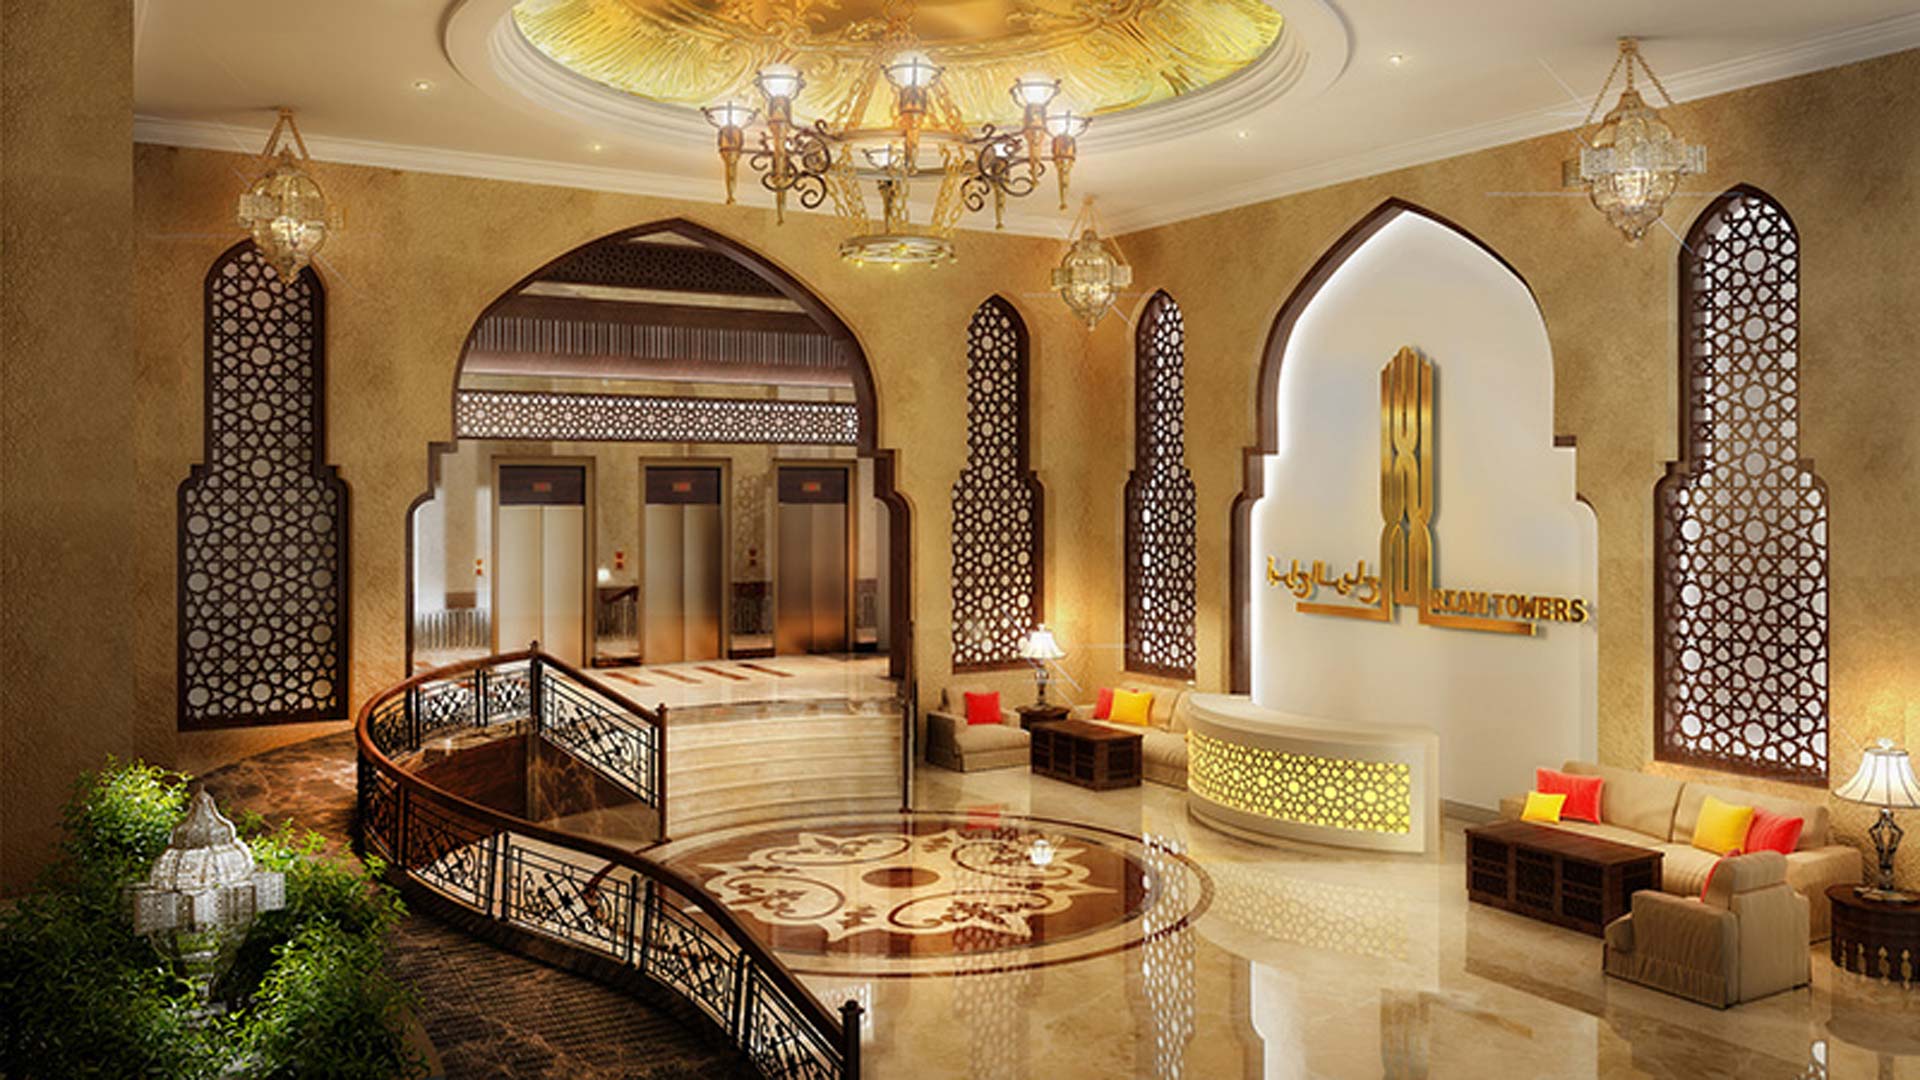 Apartment for sale in Culture Village, Dubai, UAE, 1 bedroom, 102 m², No. 25394 – photo 3